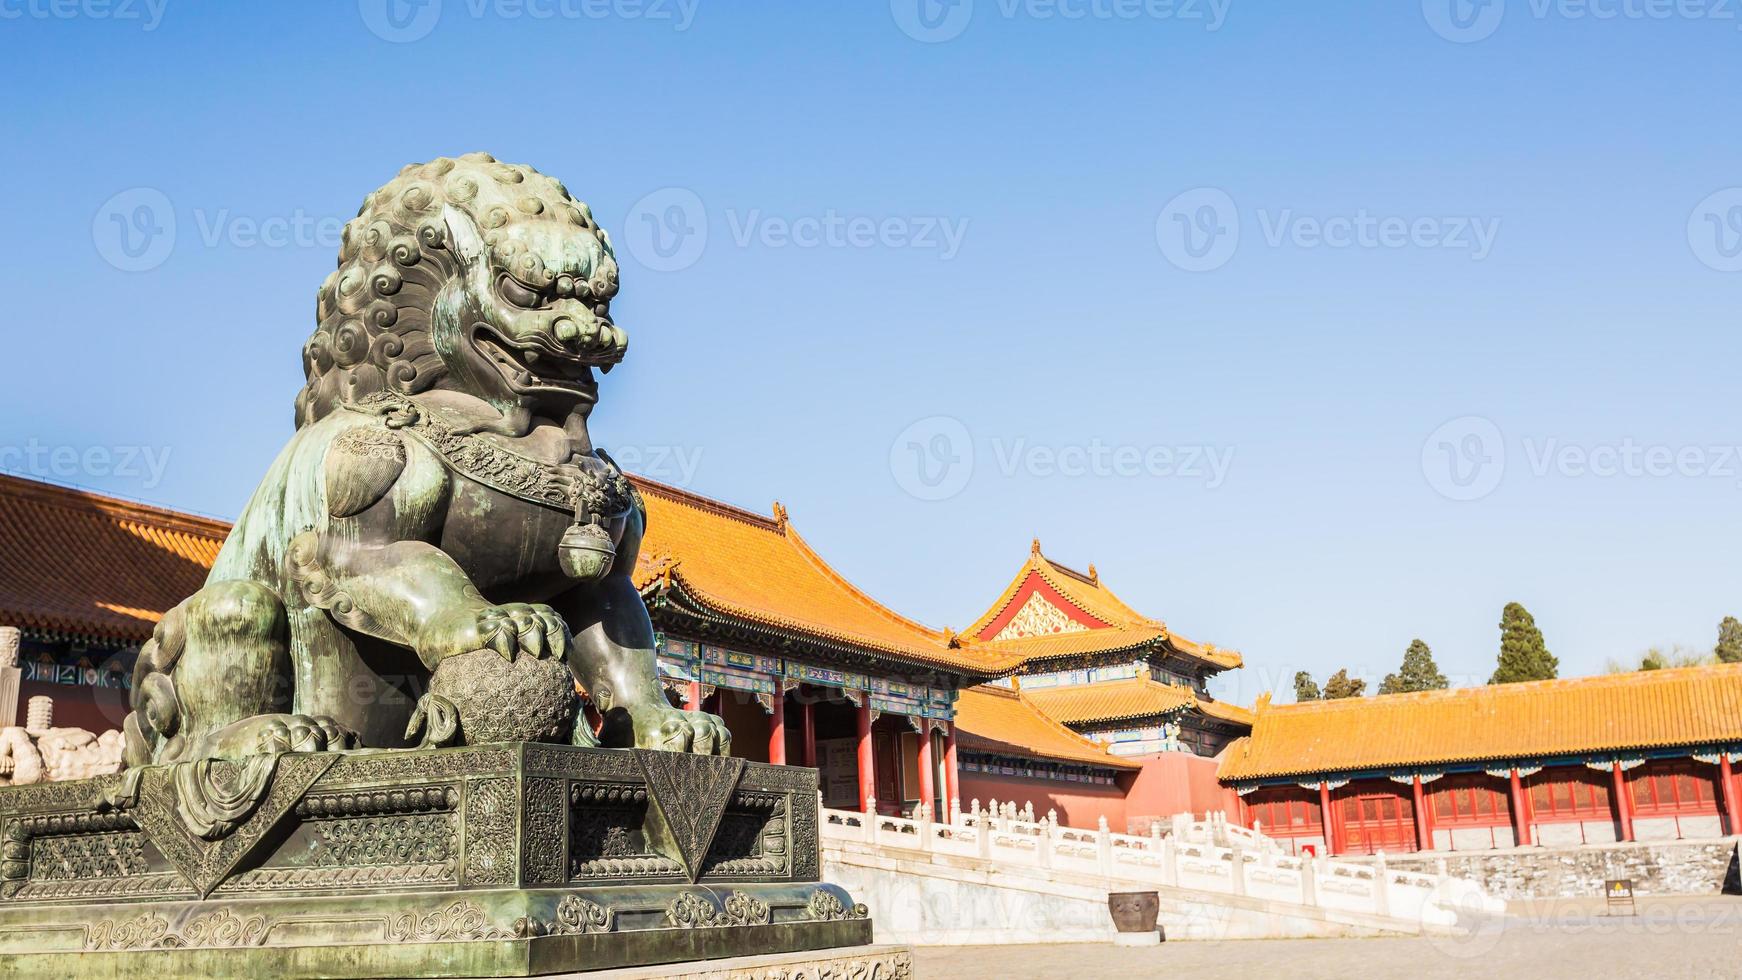 The forbidden city, world historic heritage, Beijing China. photo